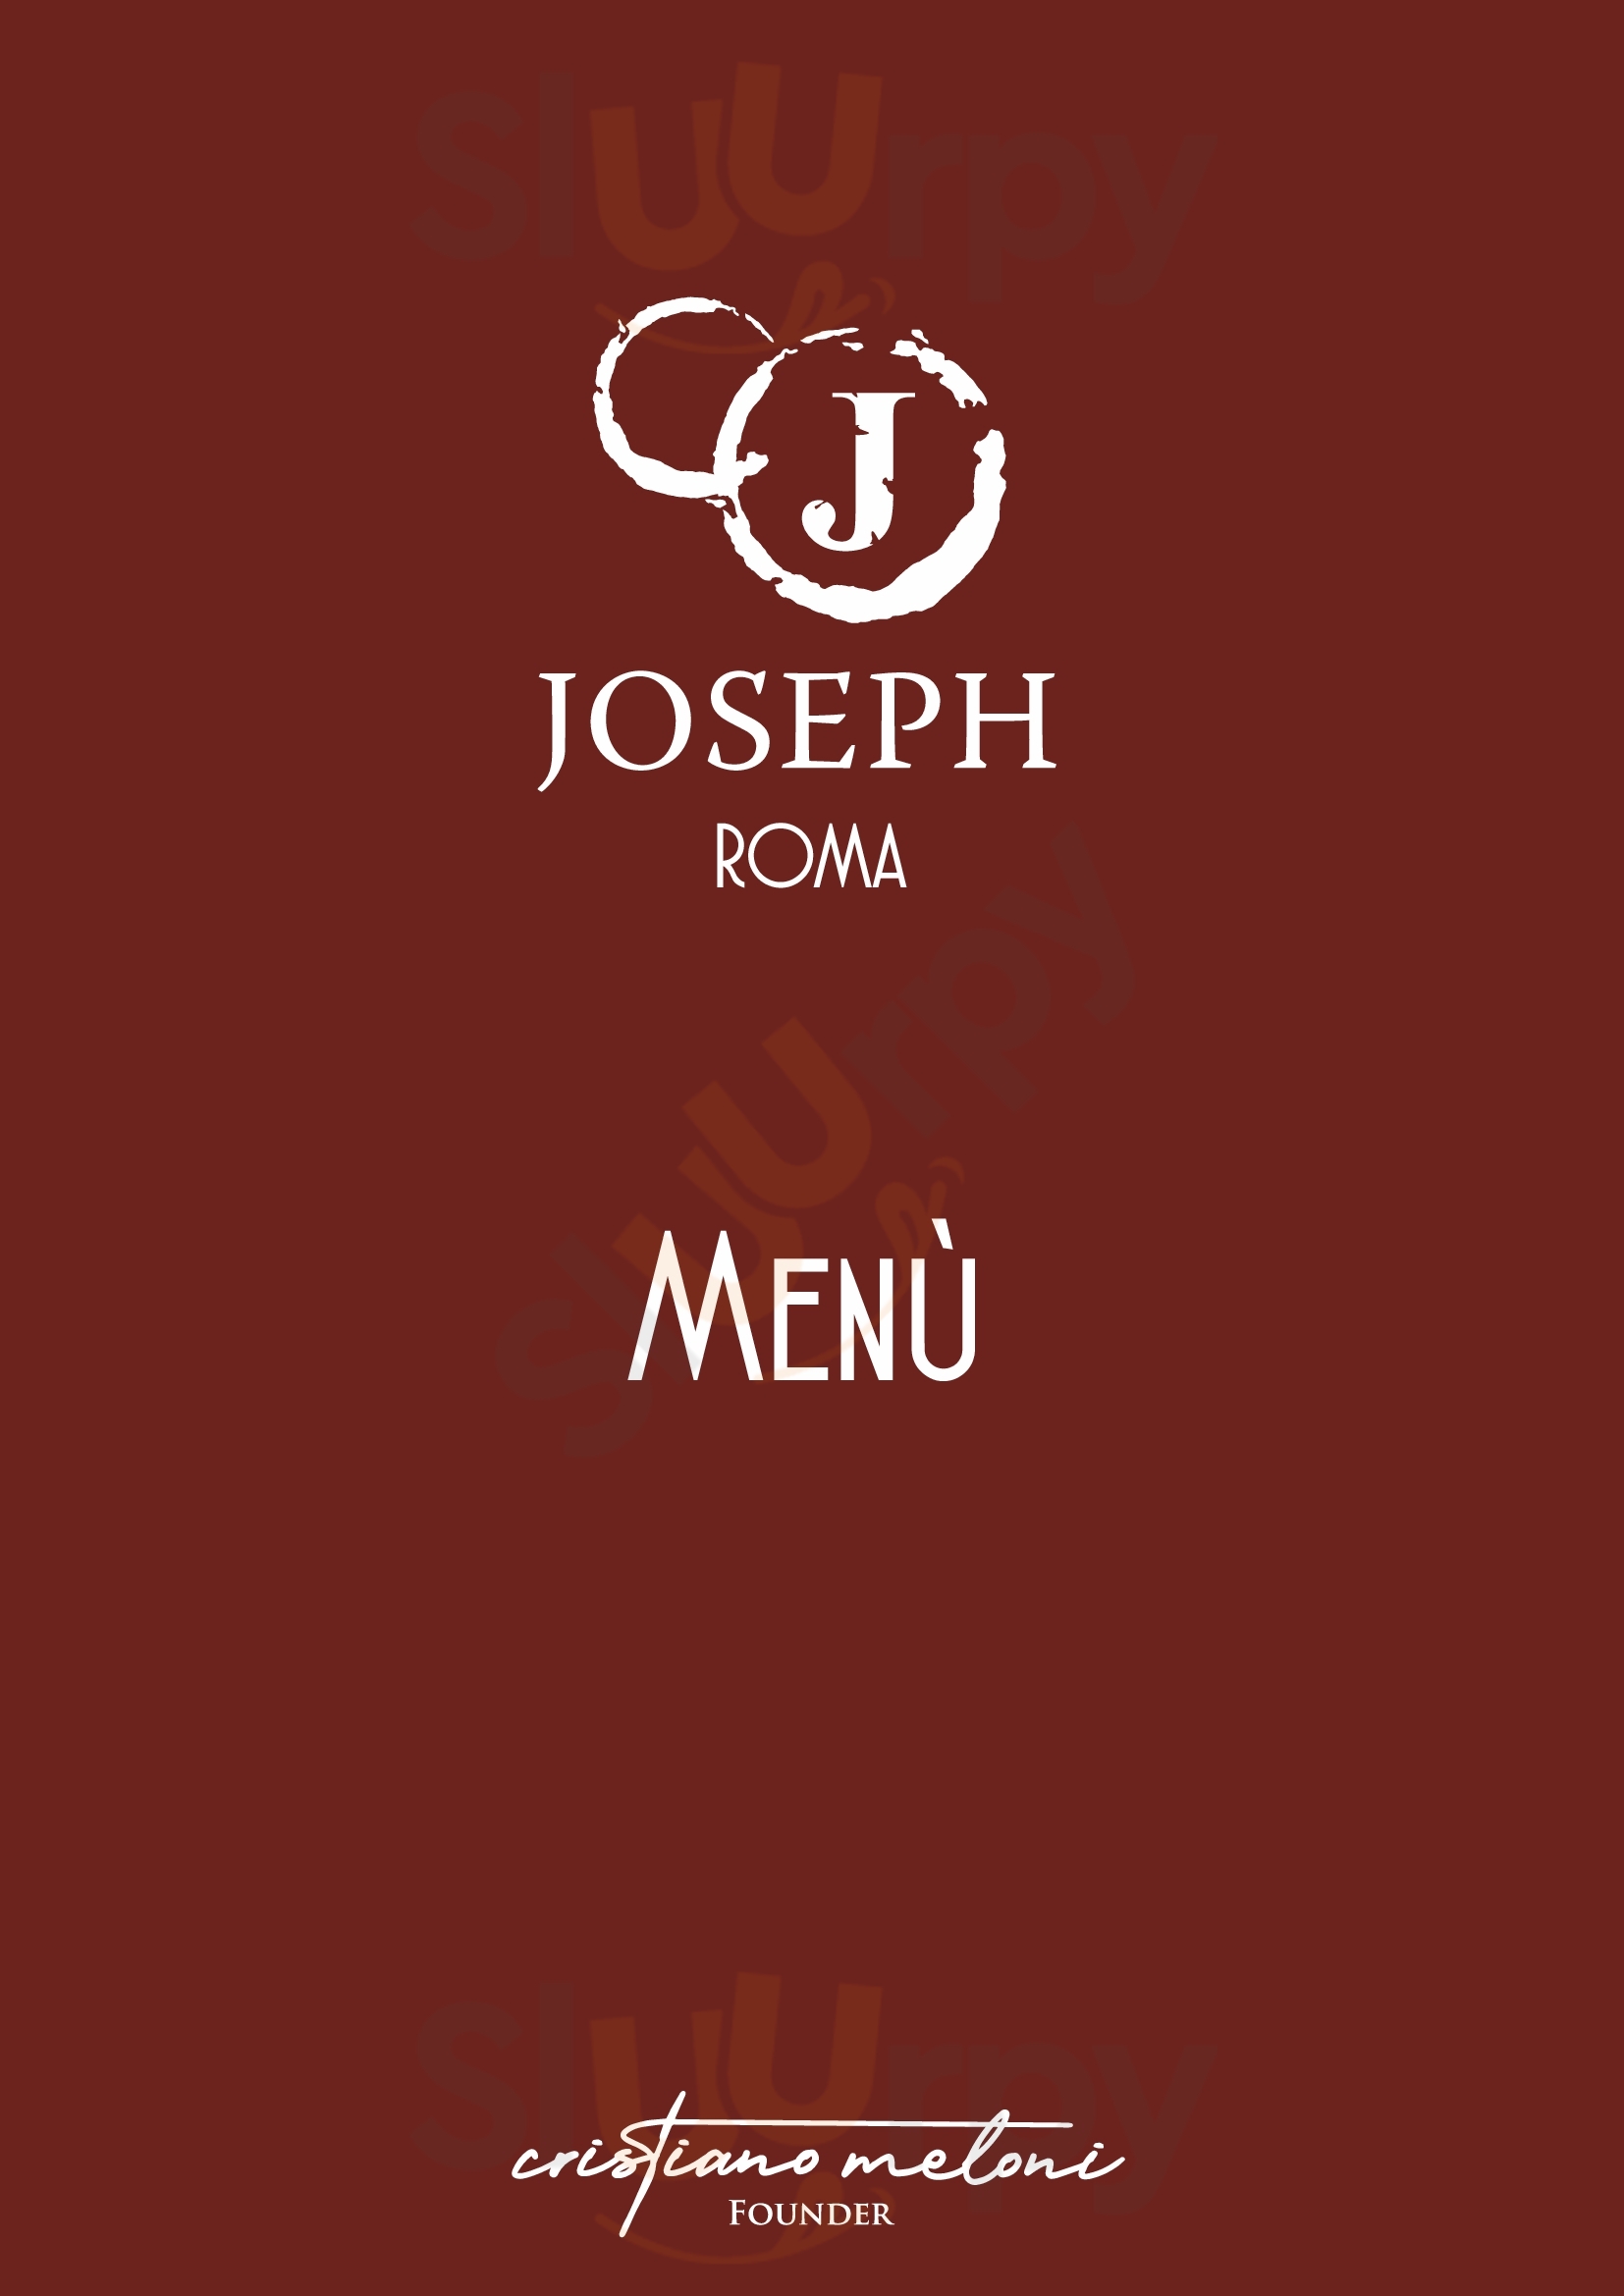 Ristorante Joseph Roma menù 1 pagina